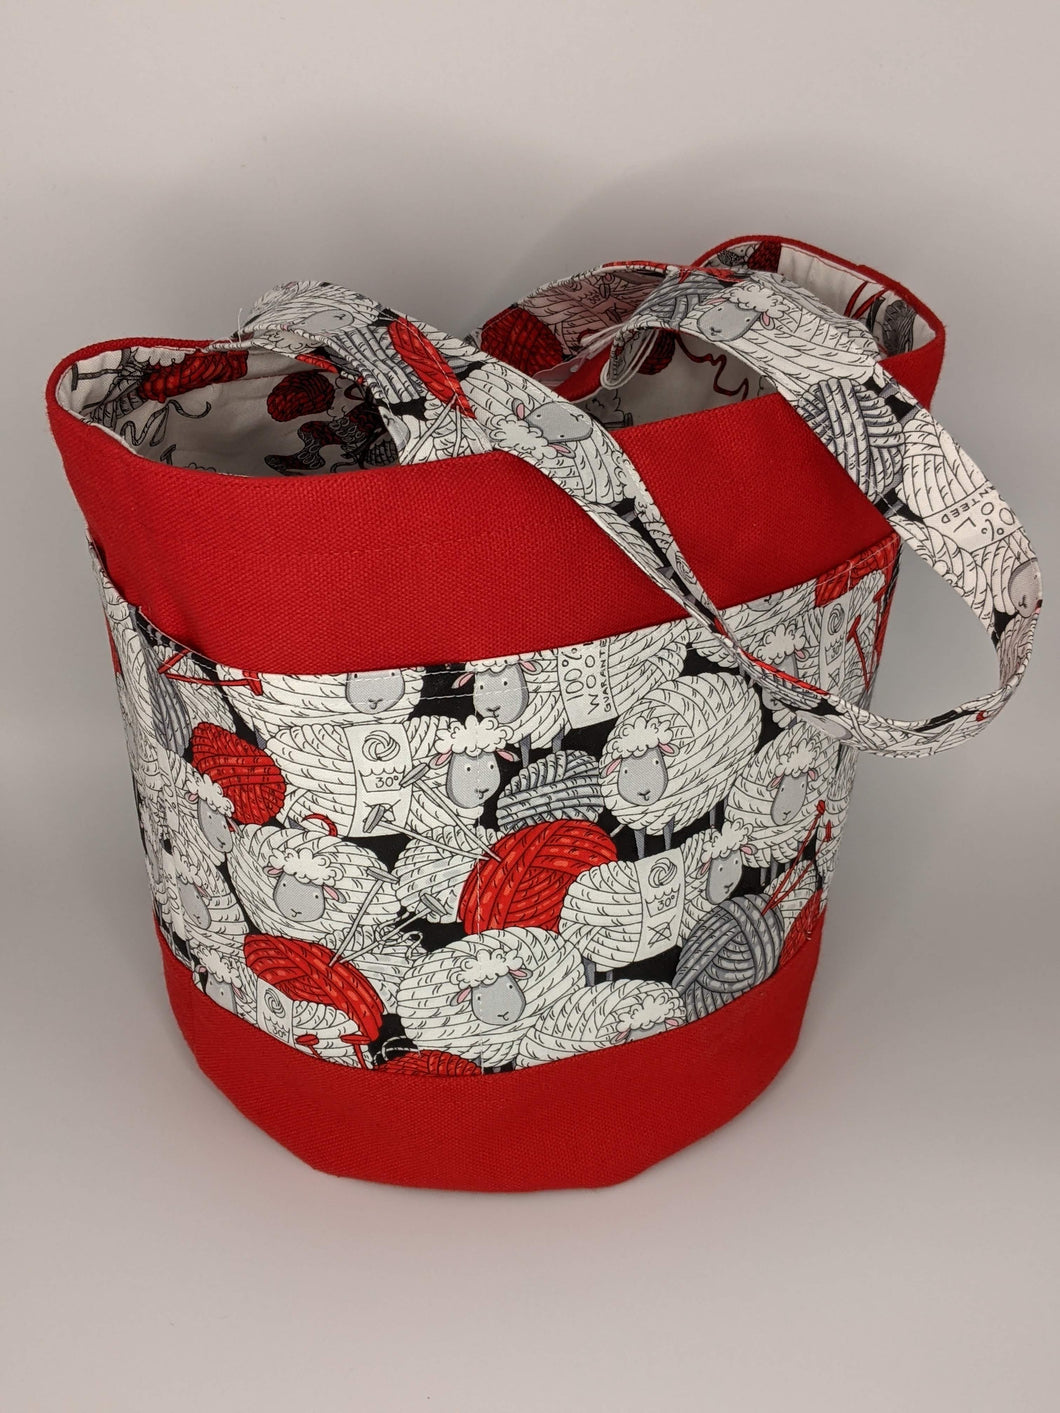 Weasel Works Yarn Bowl / Project Bag